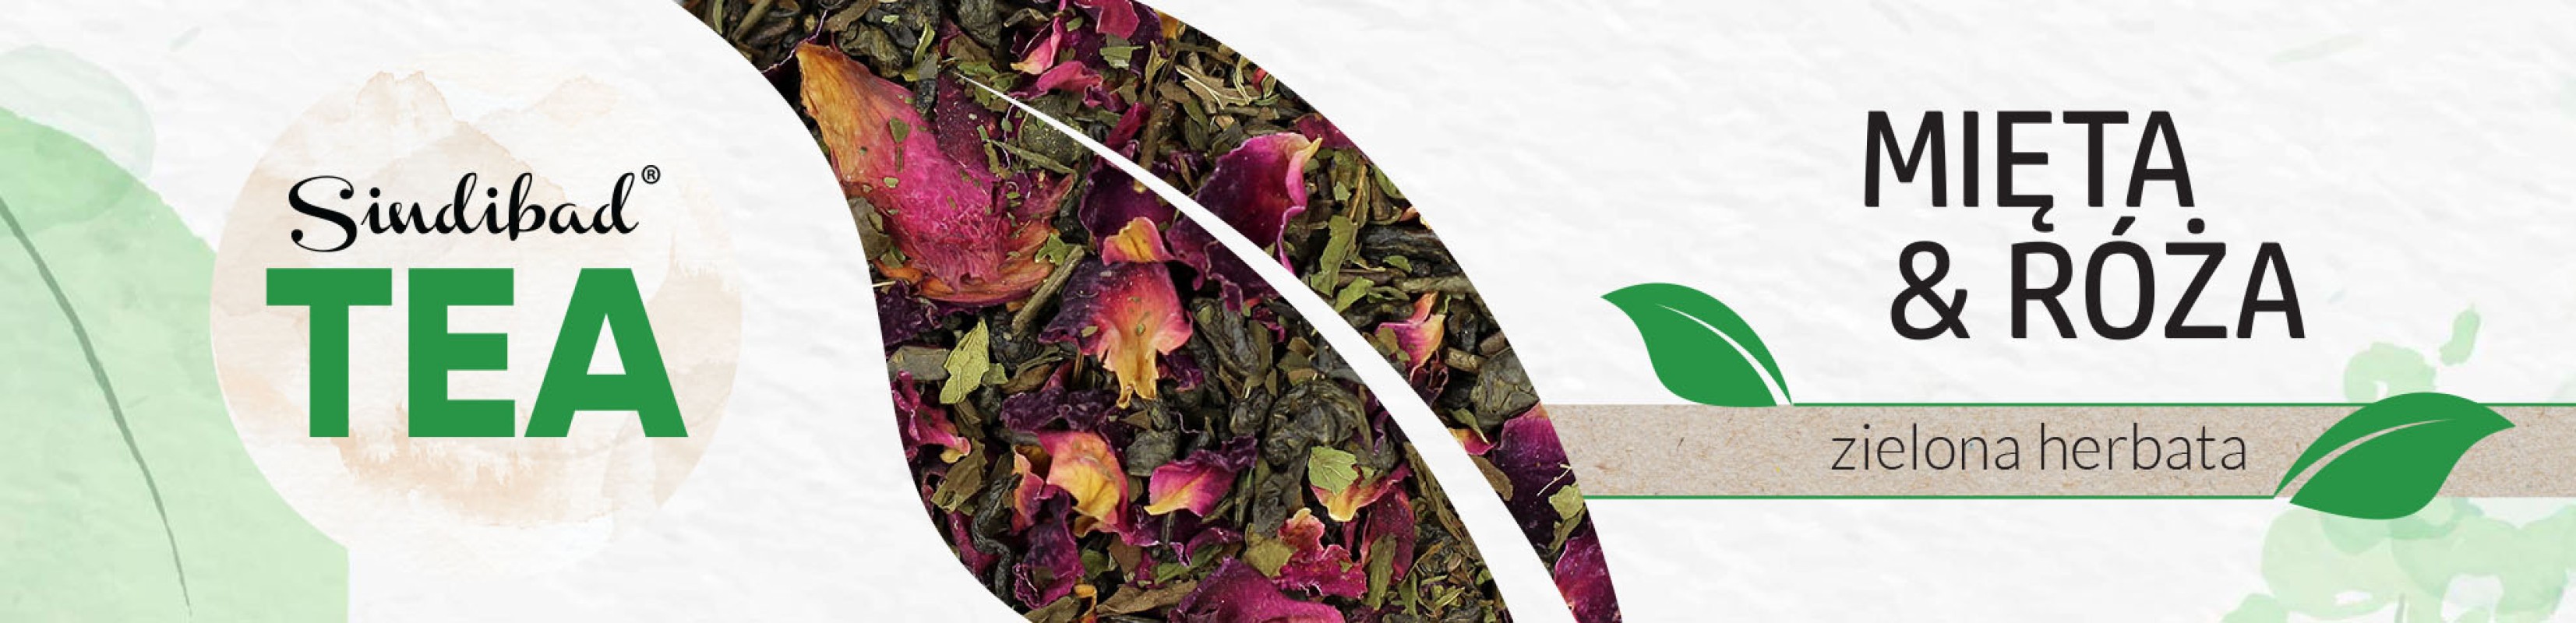 mieta i roza zielona herbata Sindibad 5